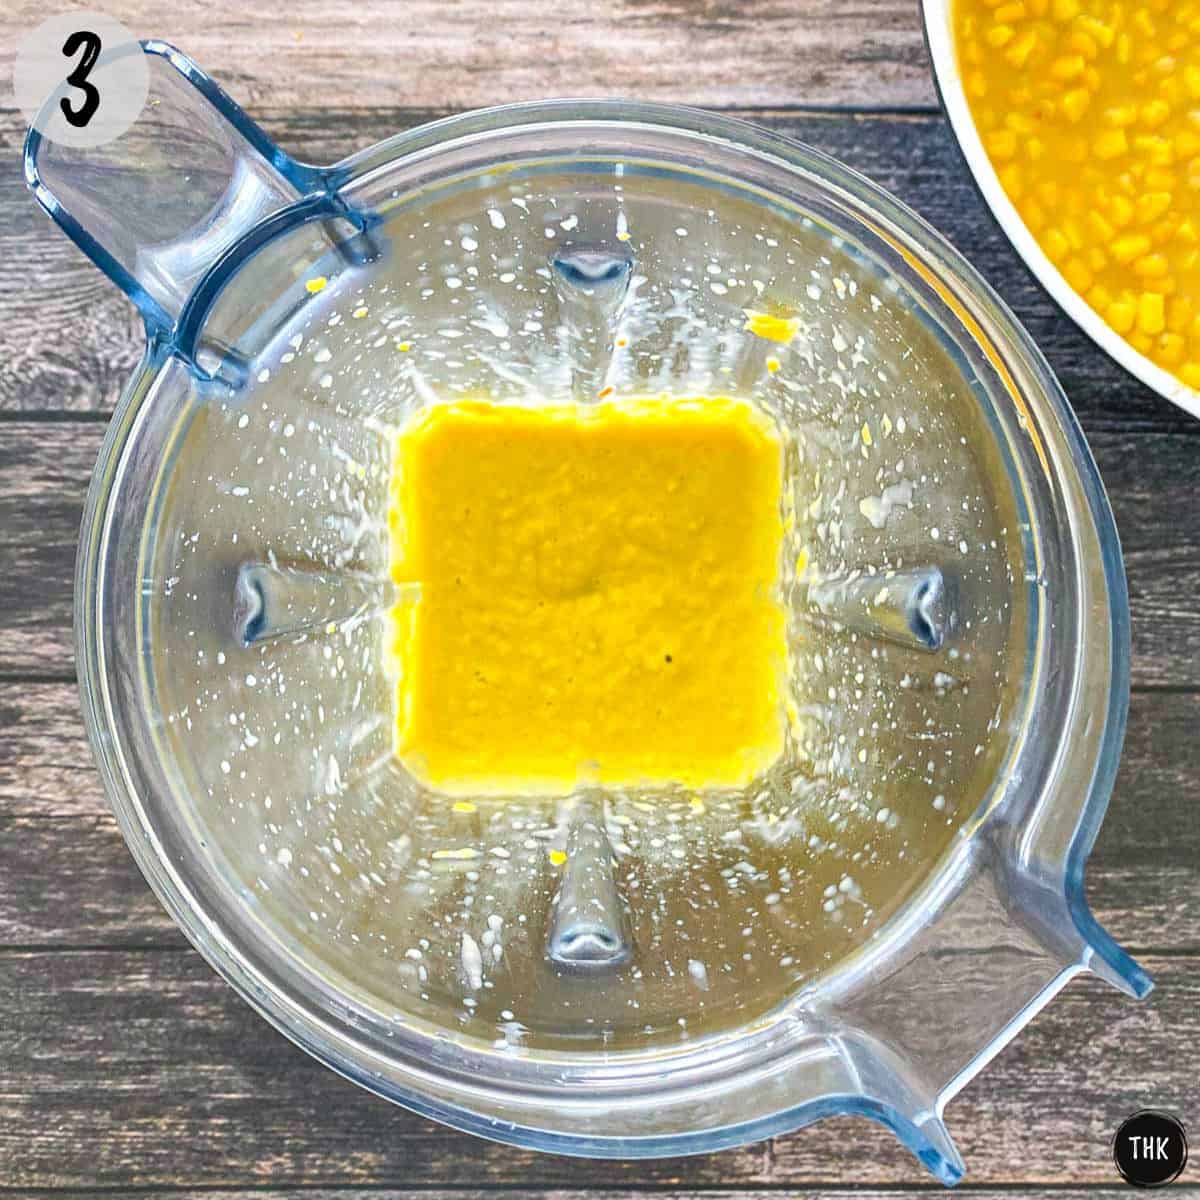 Pureed yellow mixture inside blender.